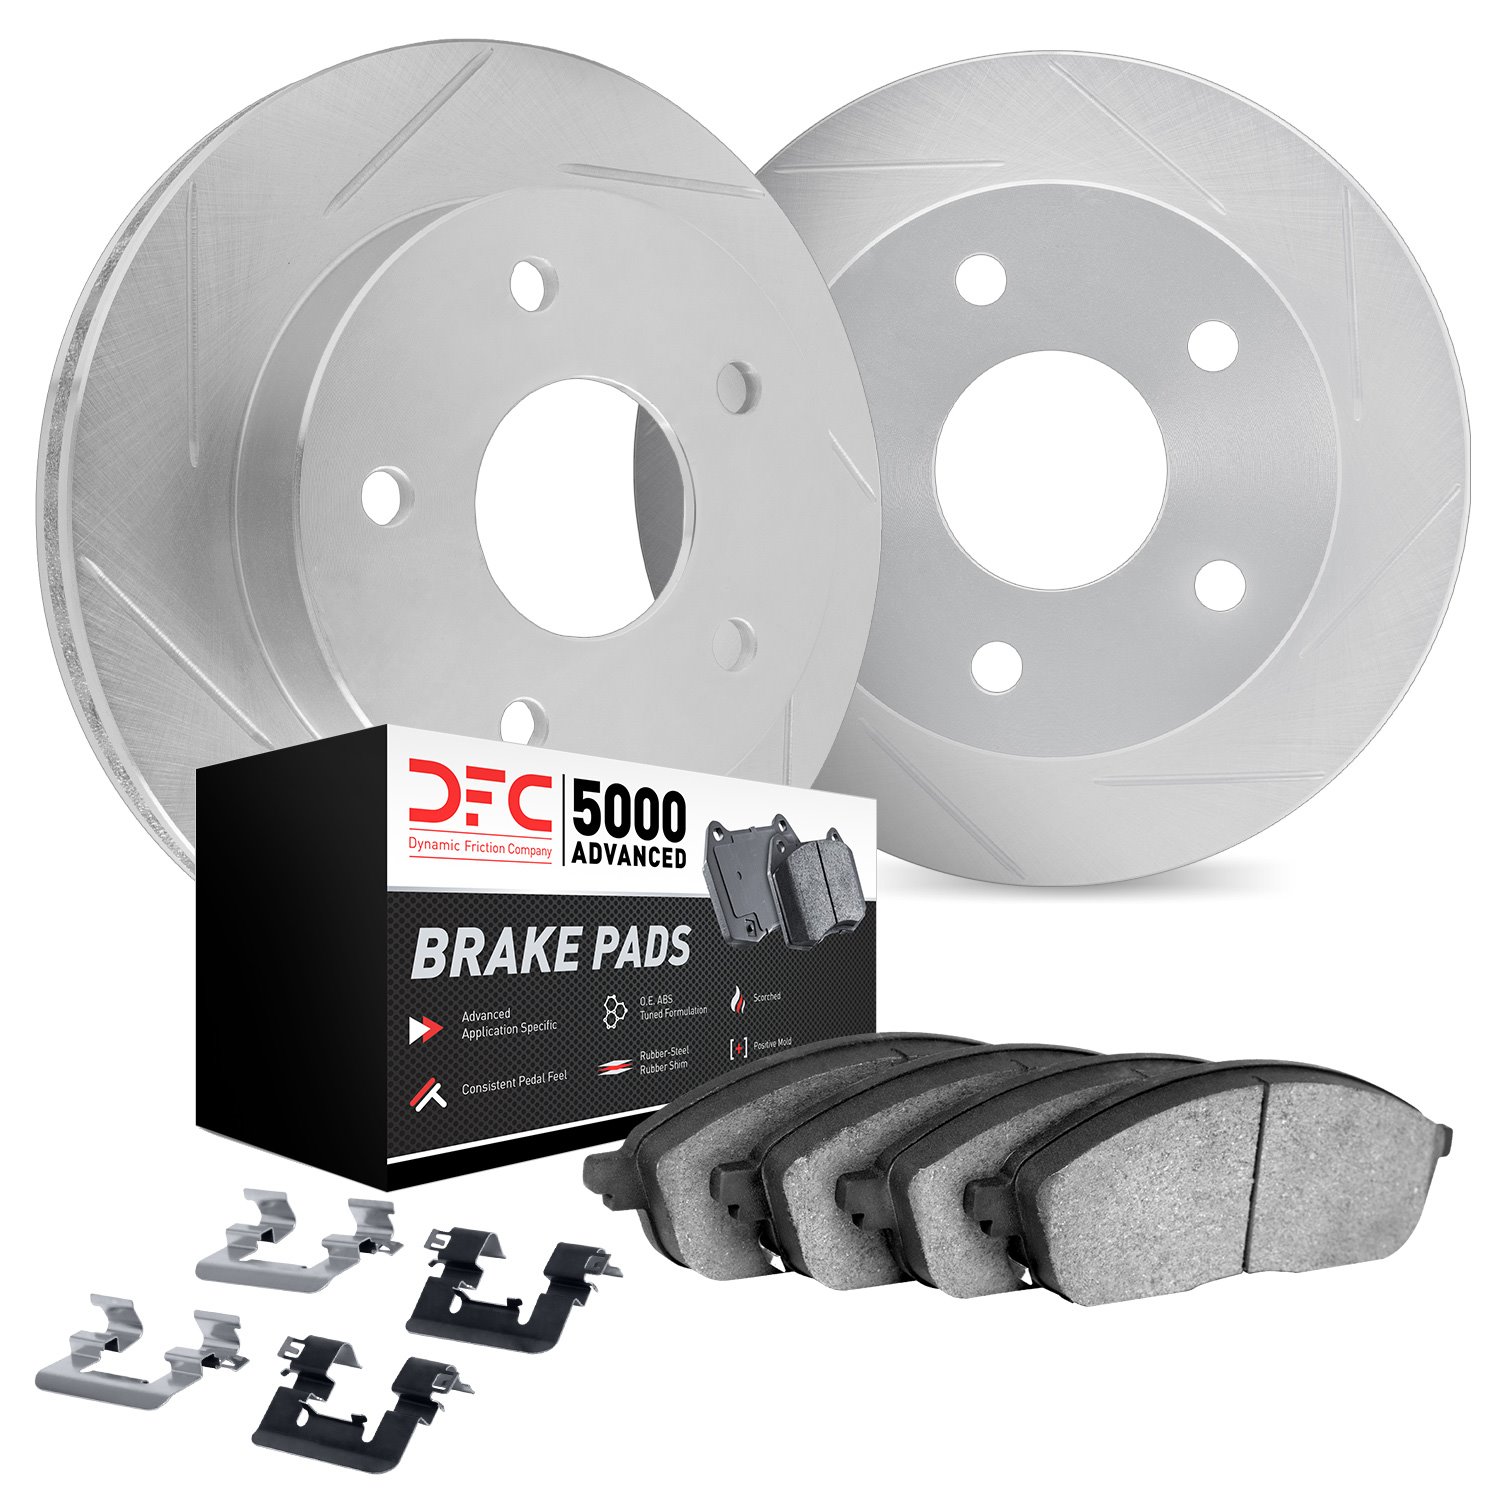 5512-55010 Slotted Brake Rotors w/5000 Advanced Brake Pads Kit & Hardware [Silver], 2015-2020 Ford/Lincoln/Mercury/Mazda, Positi